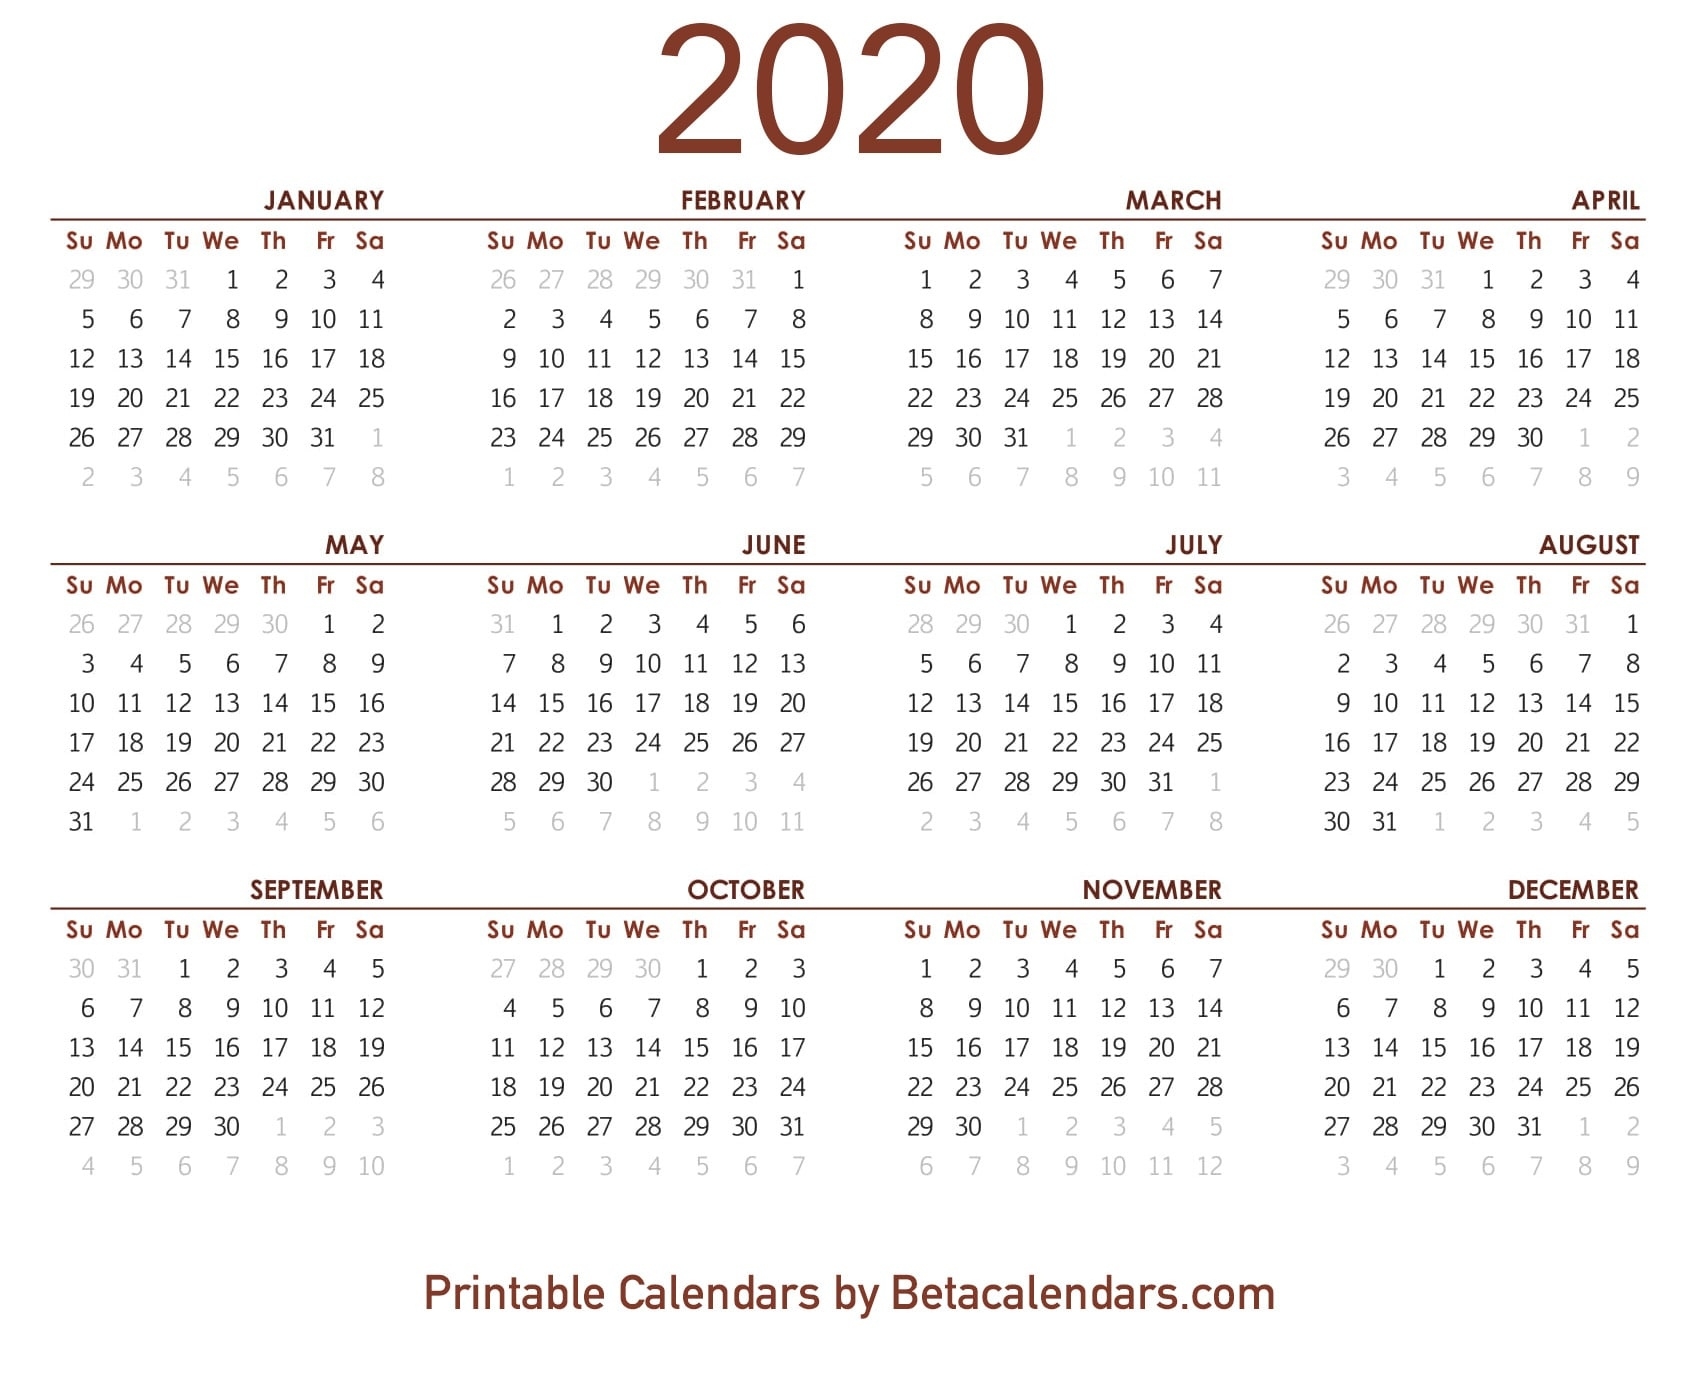 2020 Calendar - Free Printable Yearly Calendar 2020 Calendar 2020 Only Printable Yearly